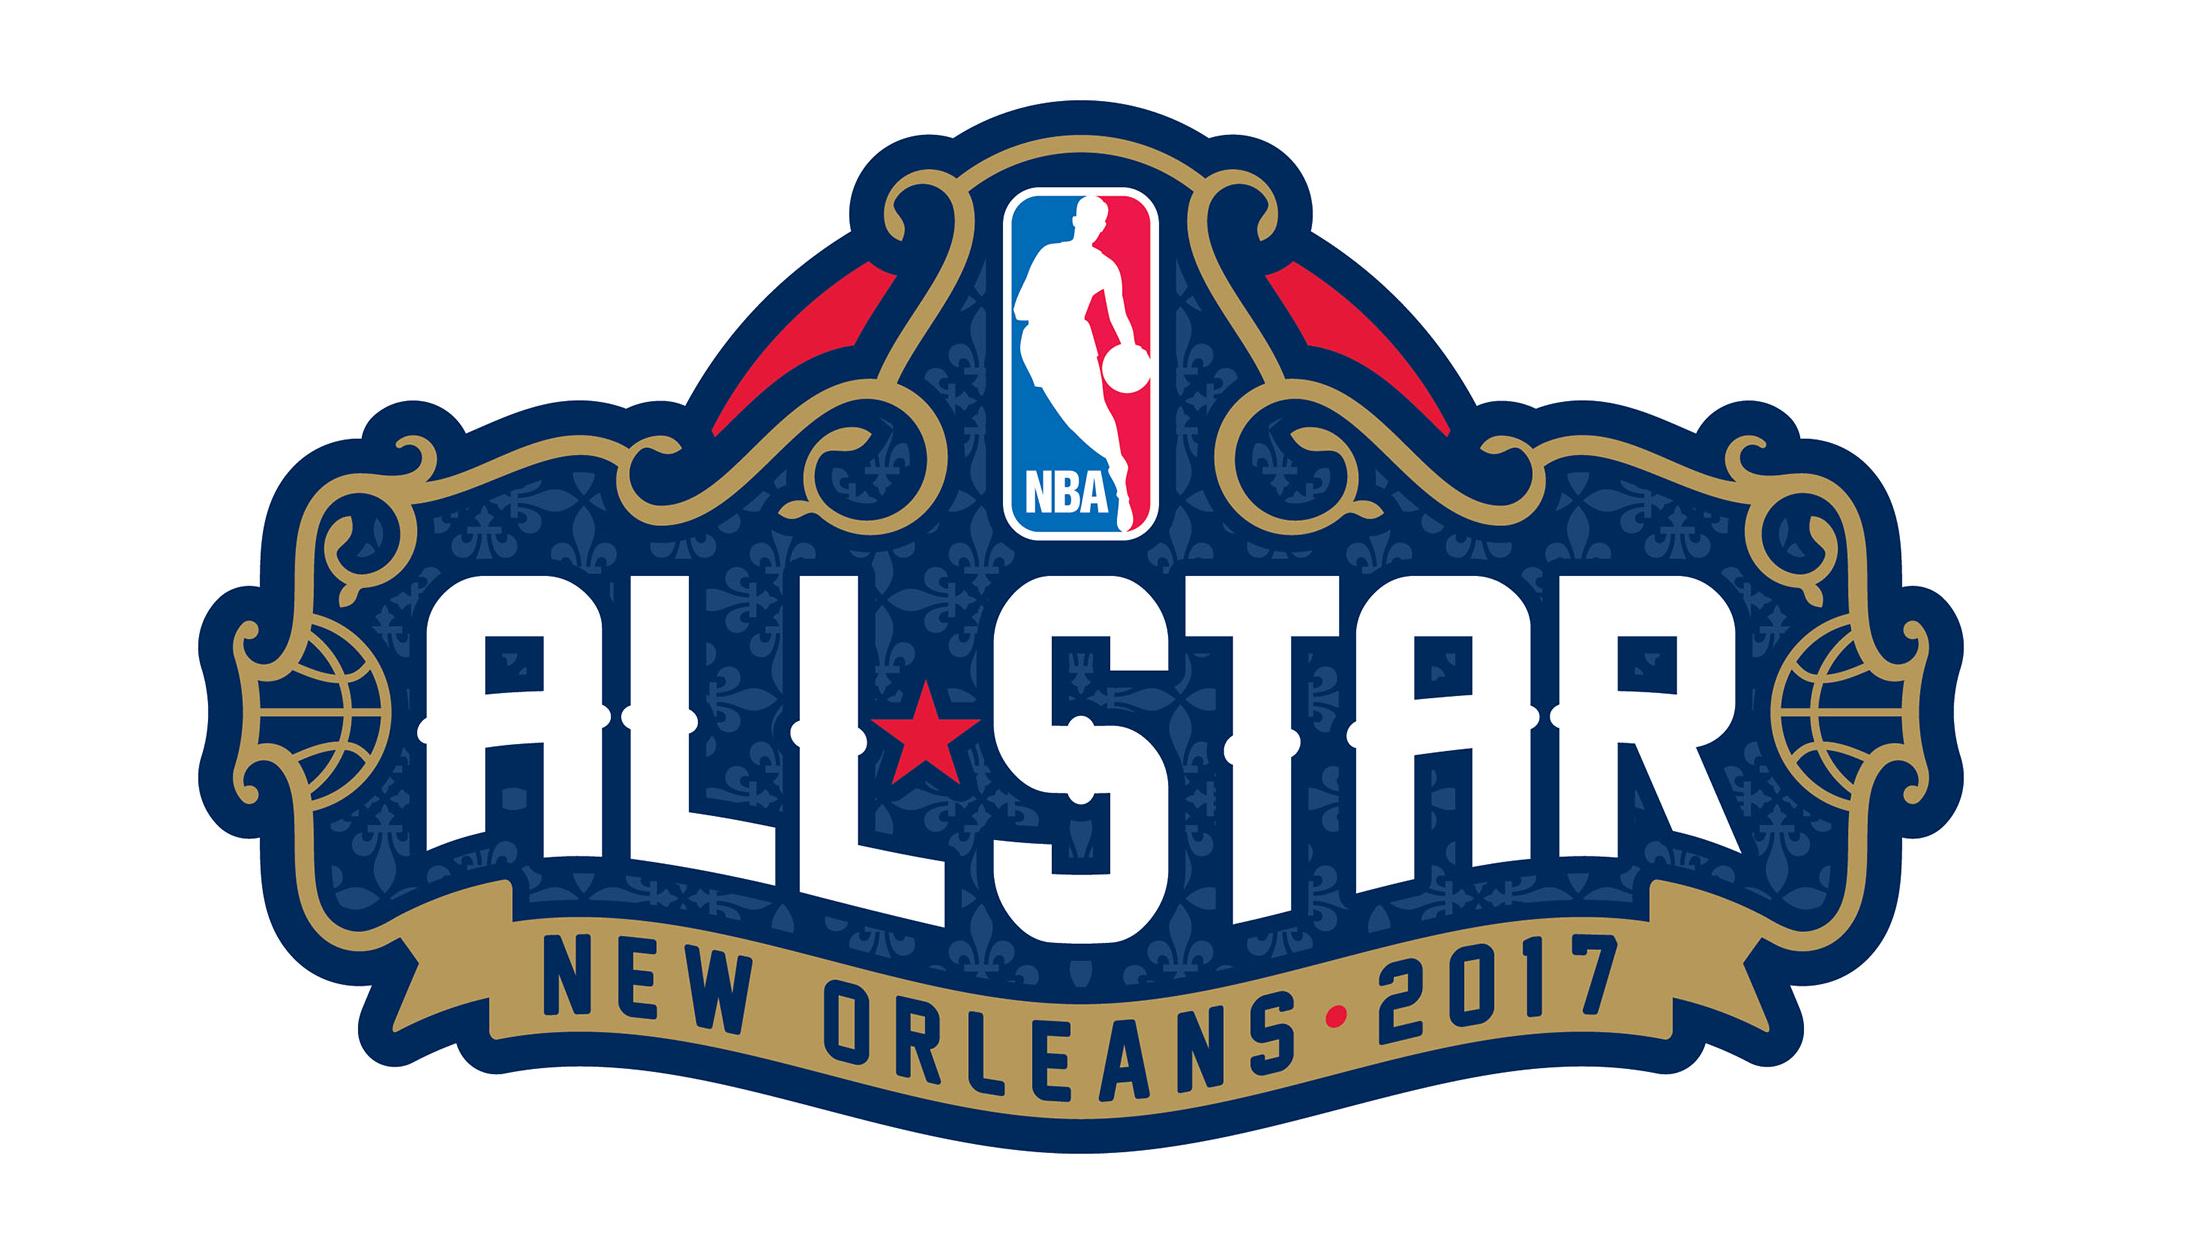 John Legend to headline NBA All-Star 2017 halftime show - NBA.com